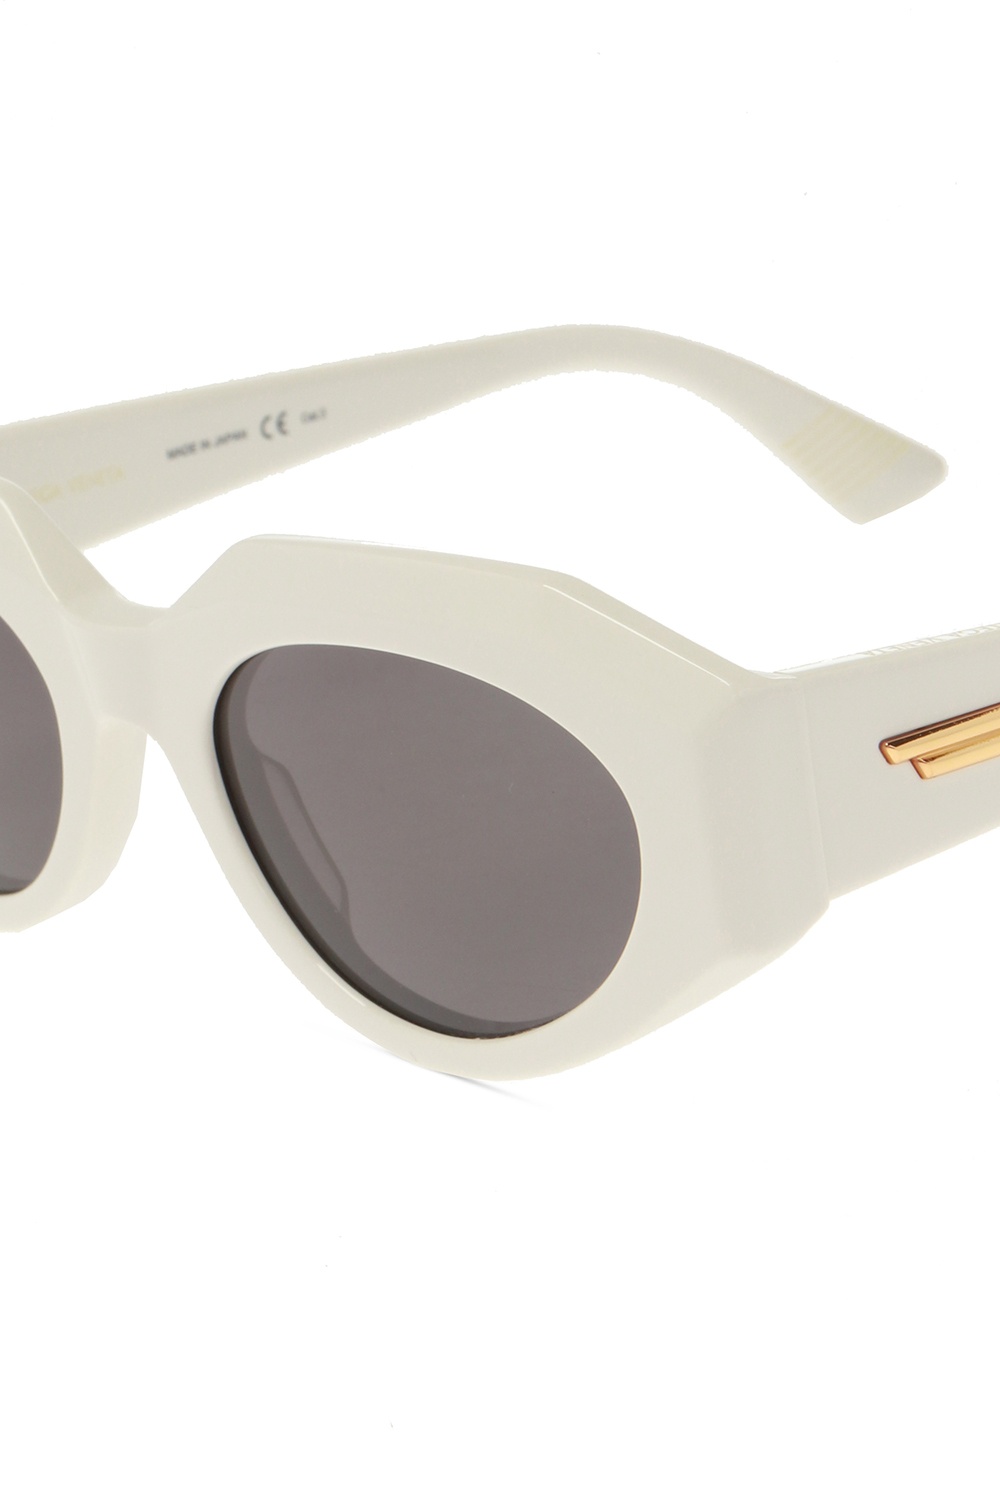 Bottega Veneta “Cyclone 11” Sunglasses in White